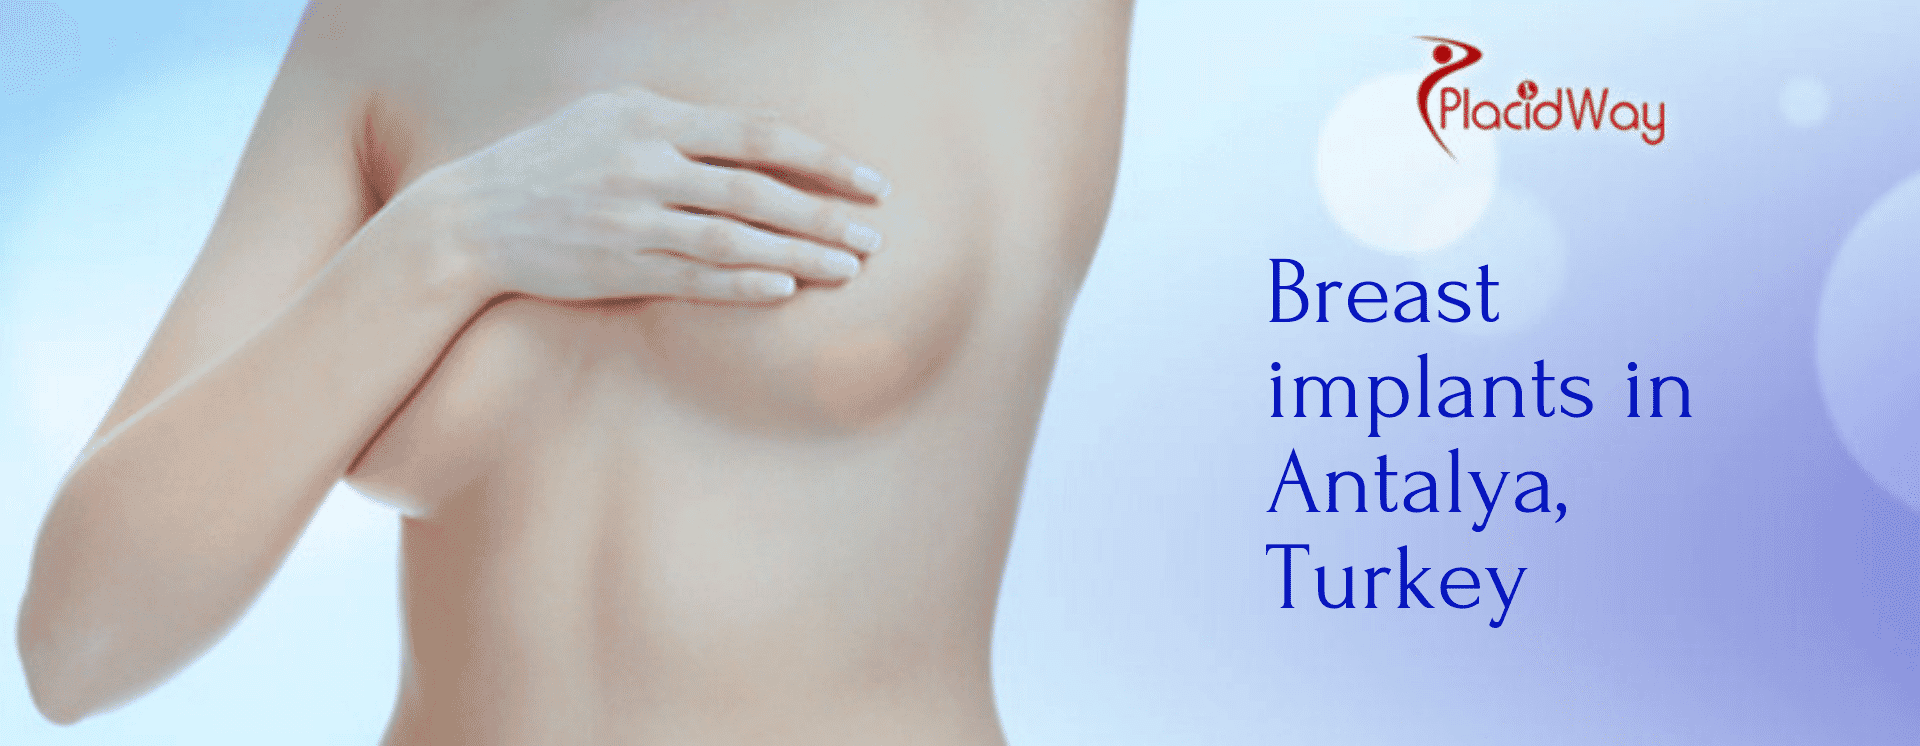 Breast implants in Antalya, Turkey